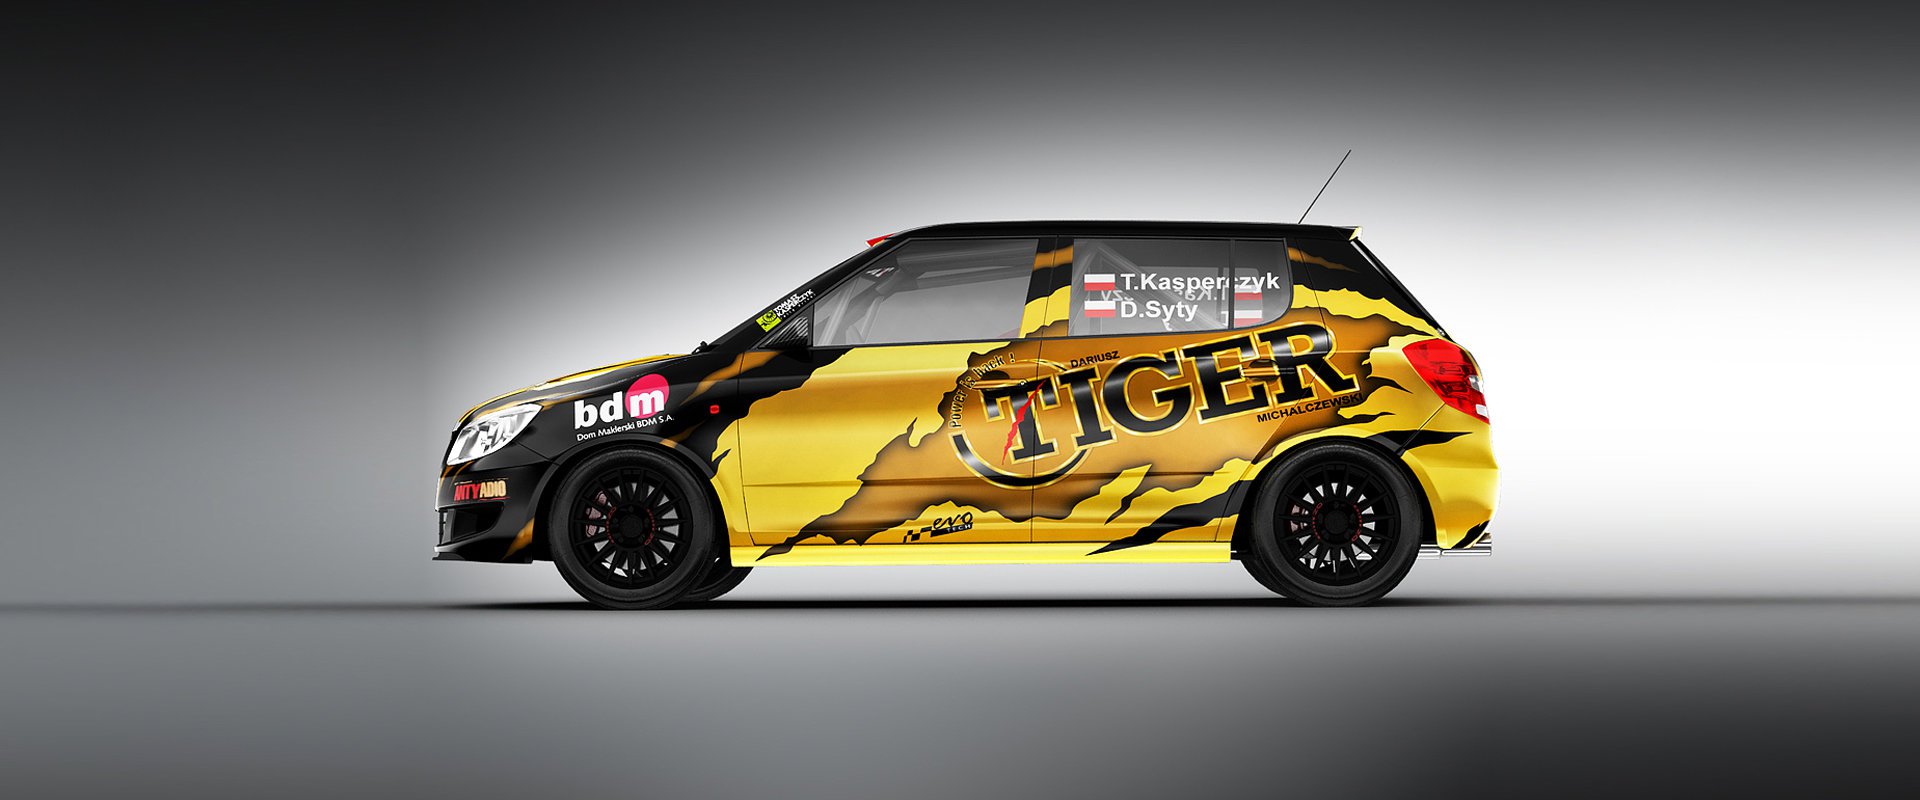 Tiger Rally Team #2